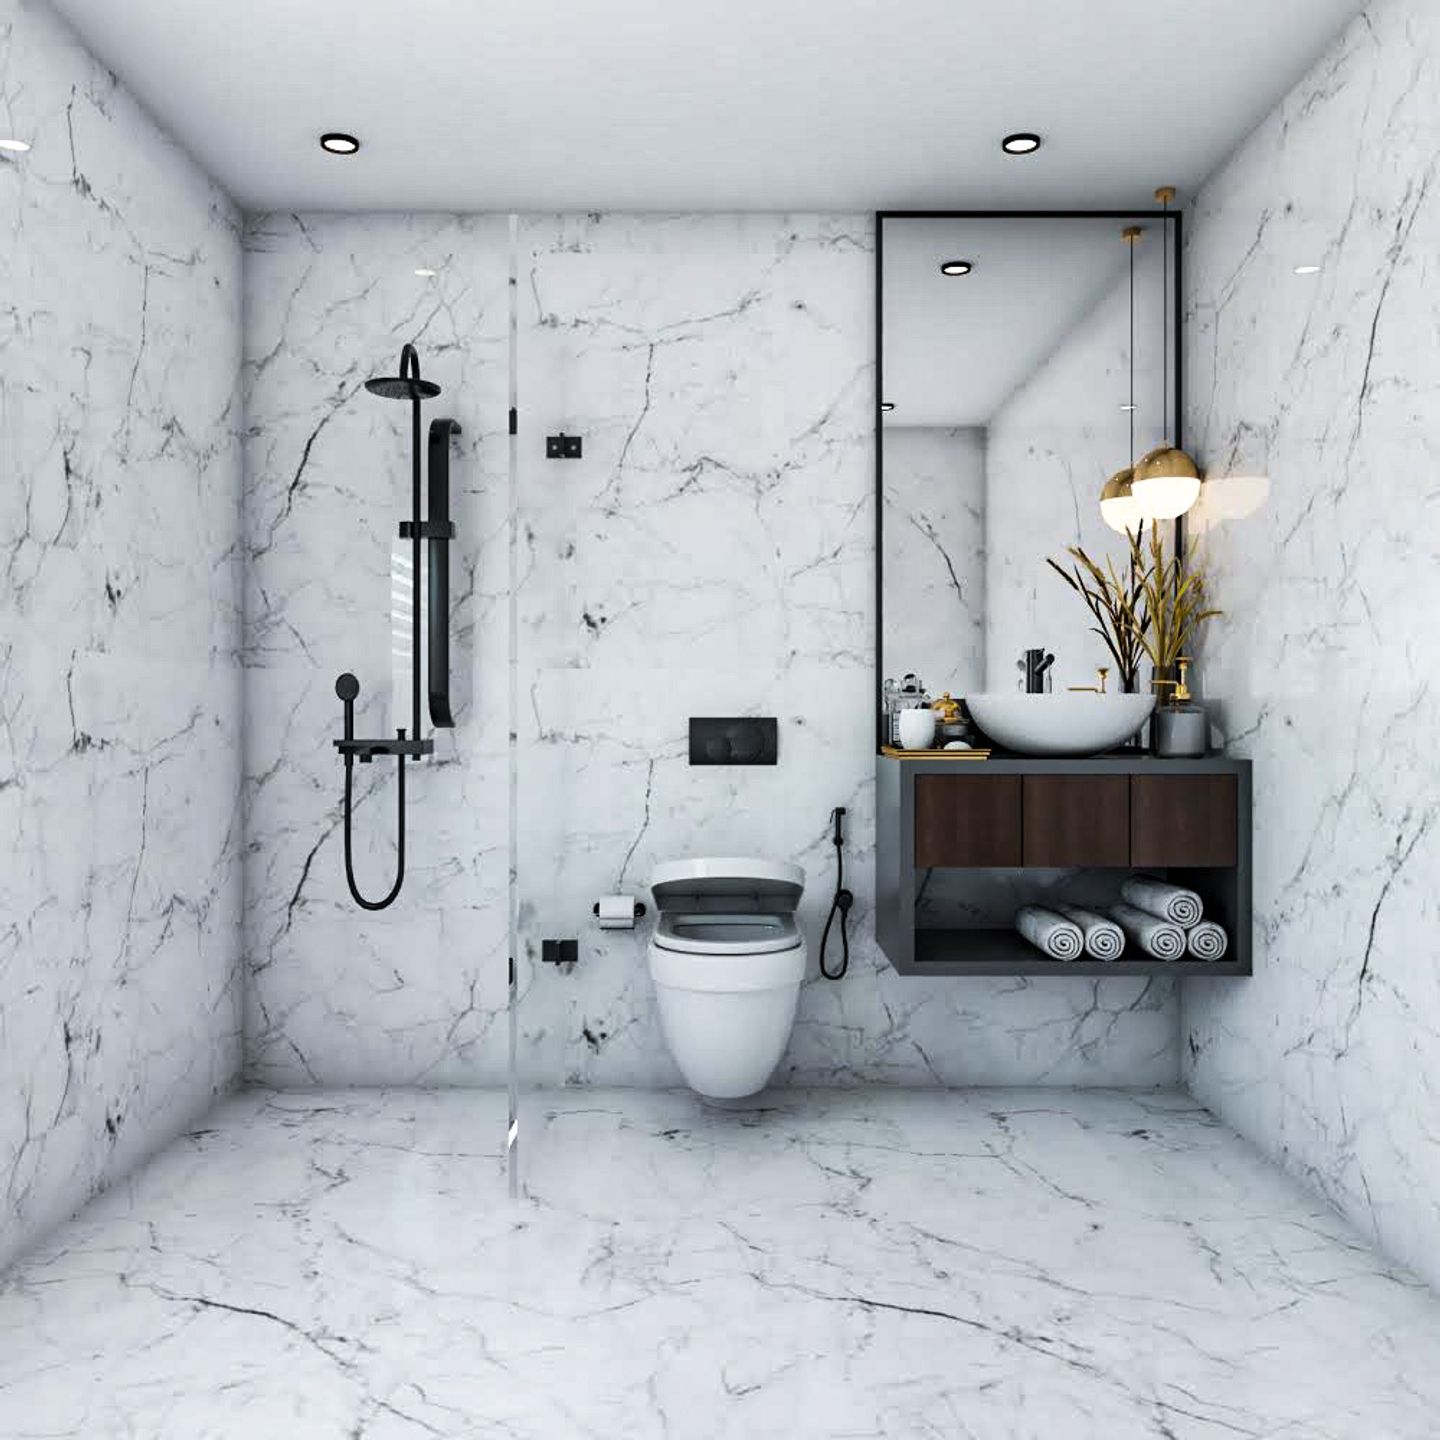 Bathroom Design With Marble Walls And Dark Wood Vanity Unit - Livspace